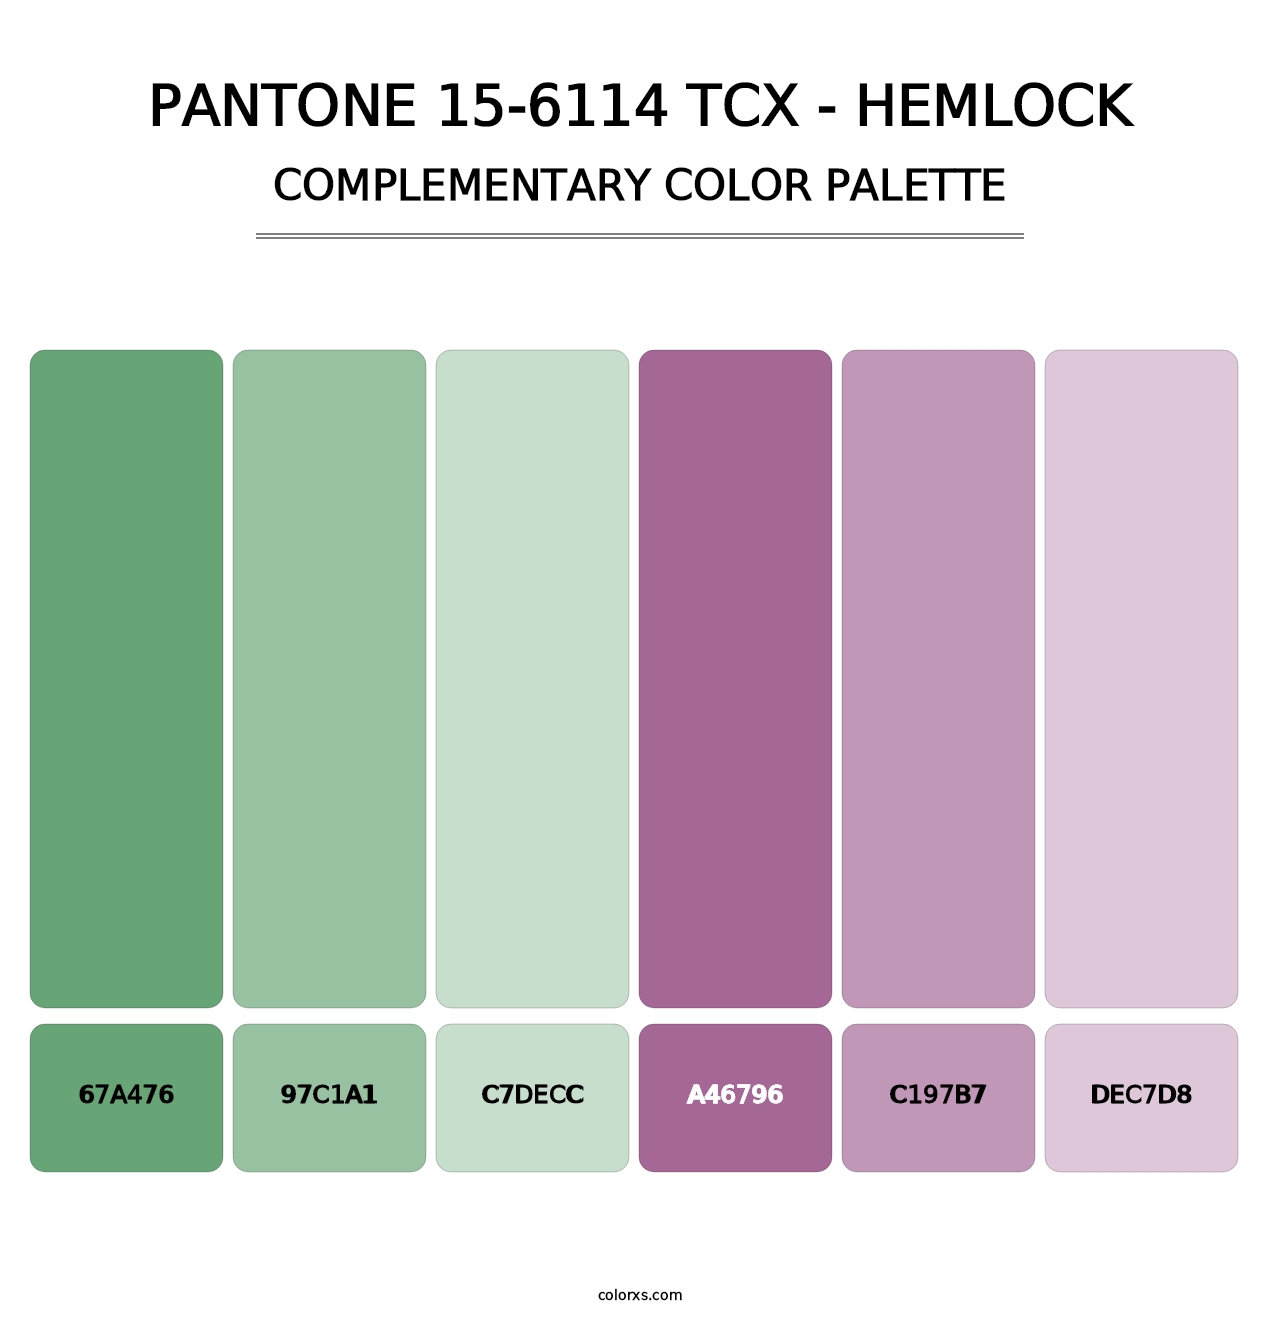 PANTONE 15-6114 TCX - Hemlock - Complementary Color Palette